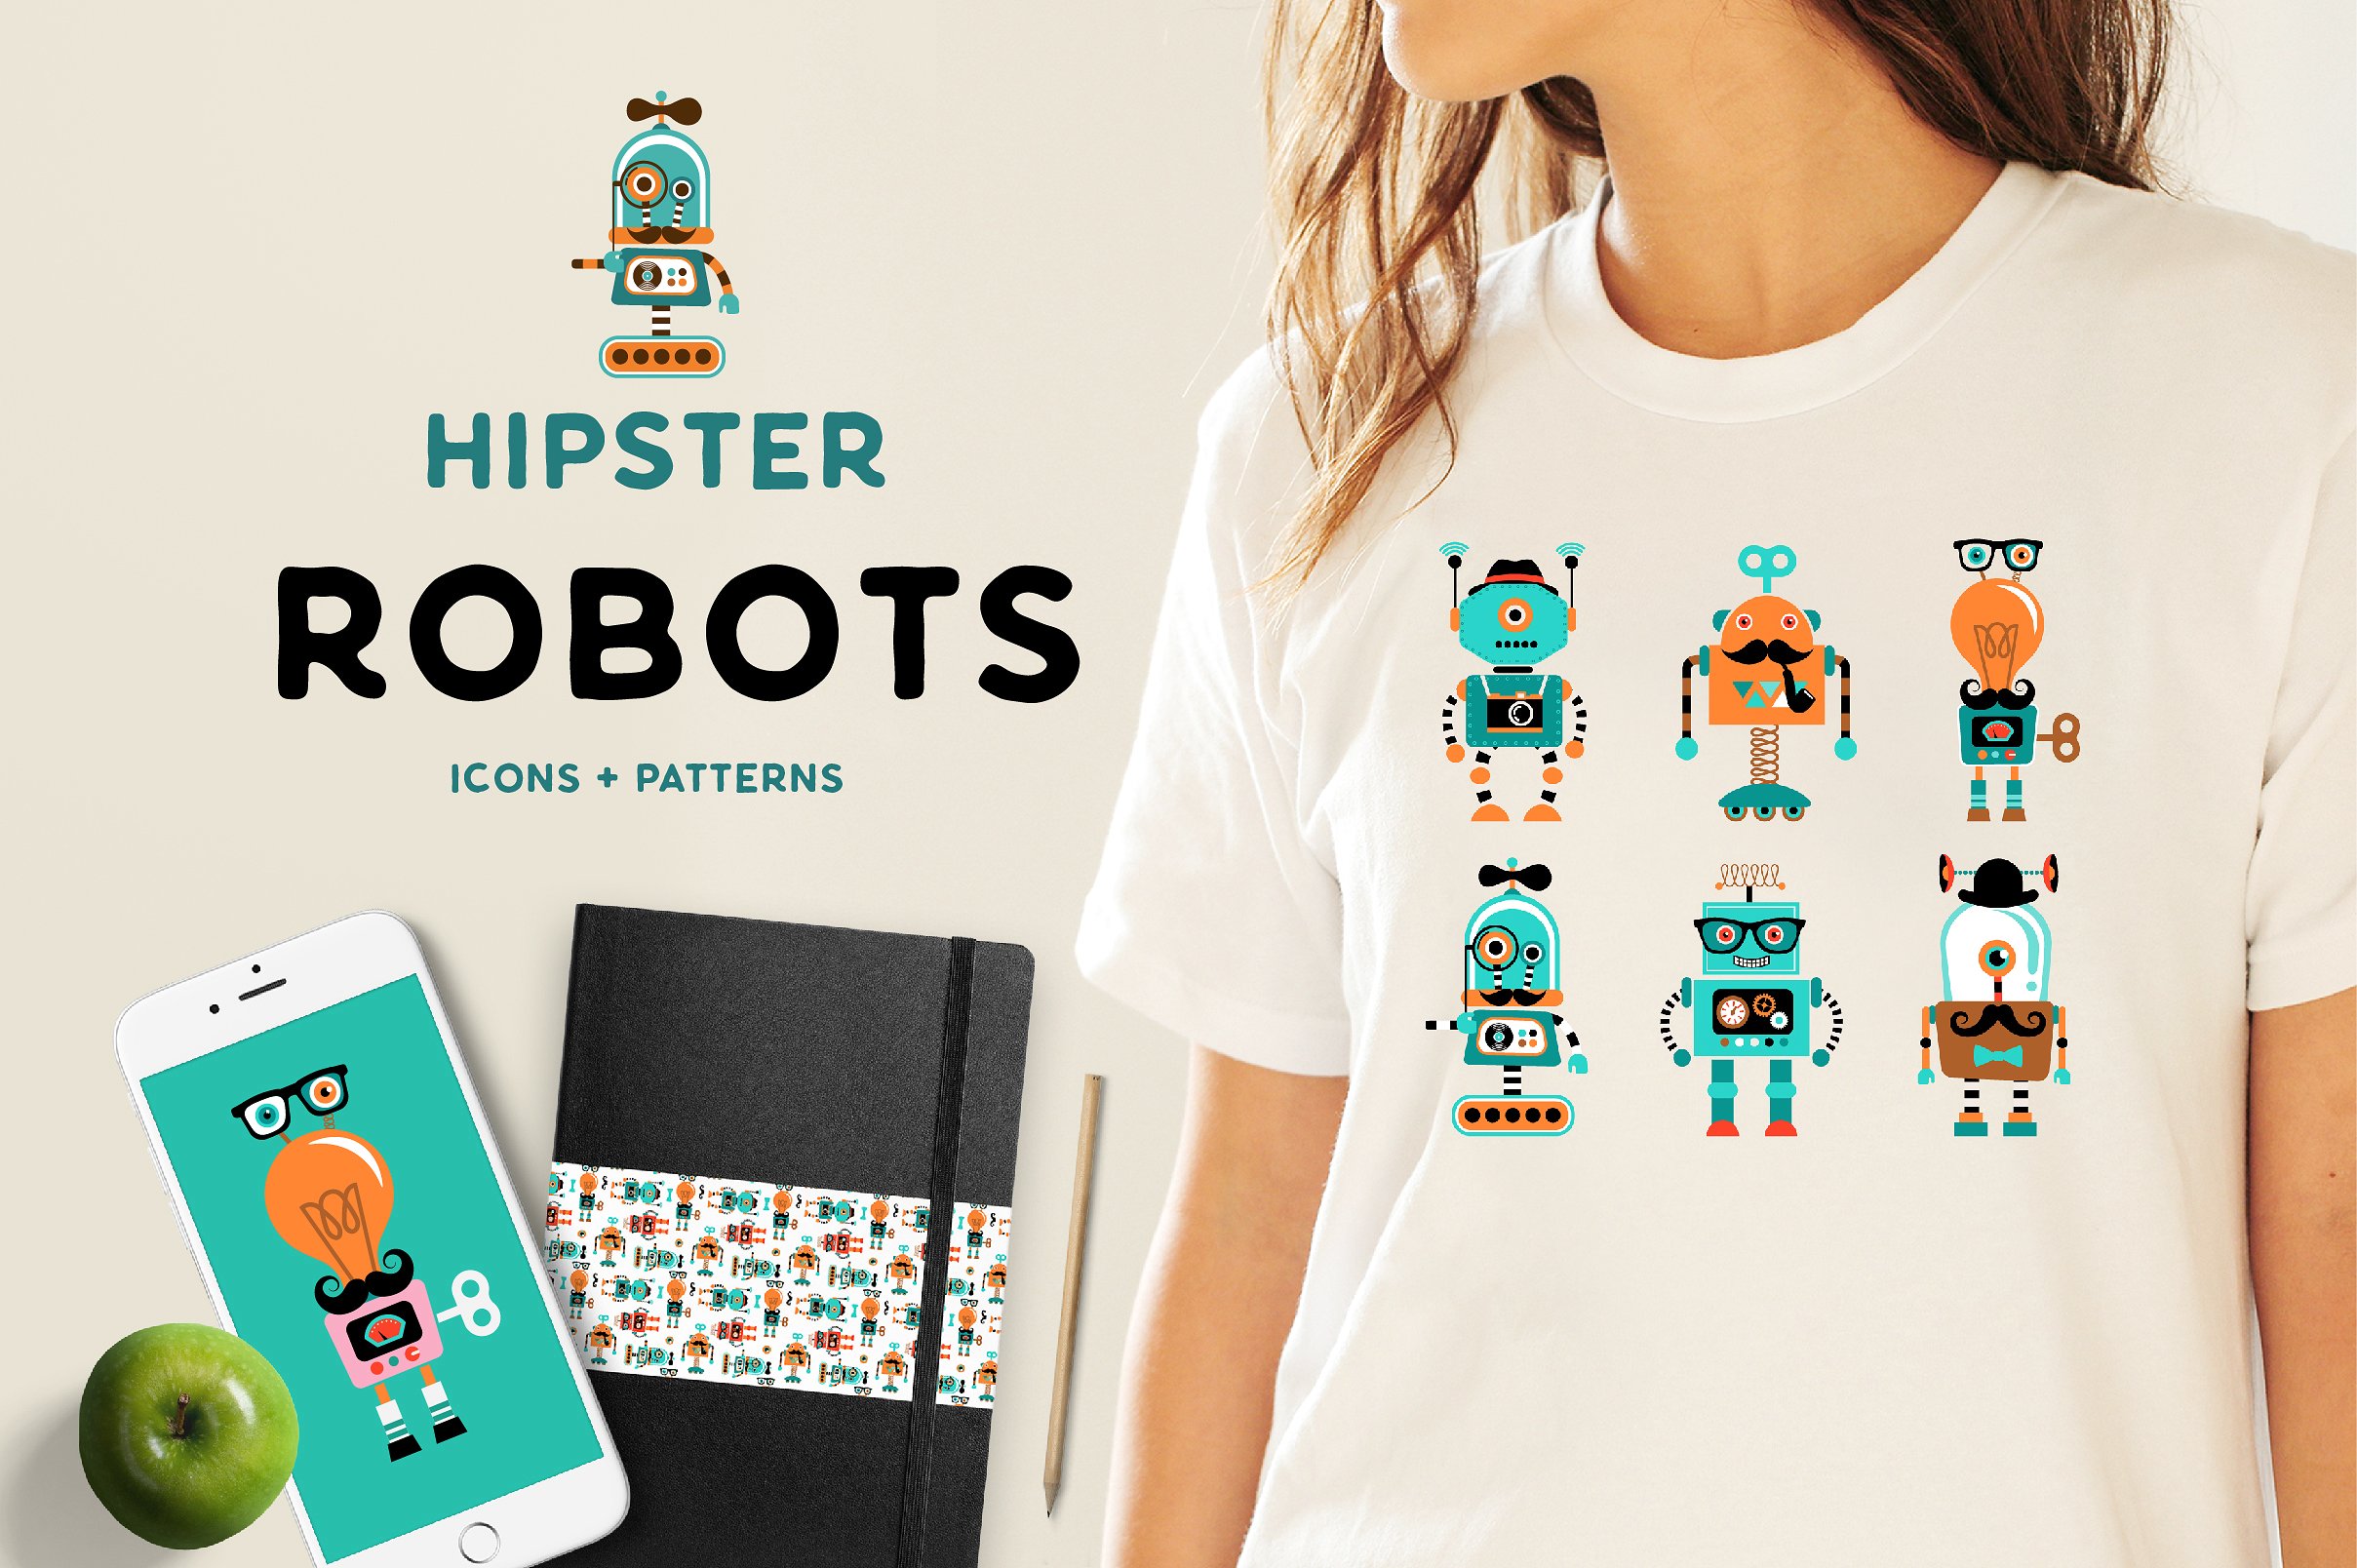 Hipster robots patterns set